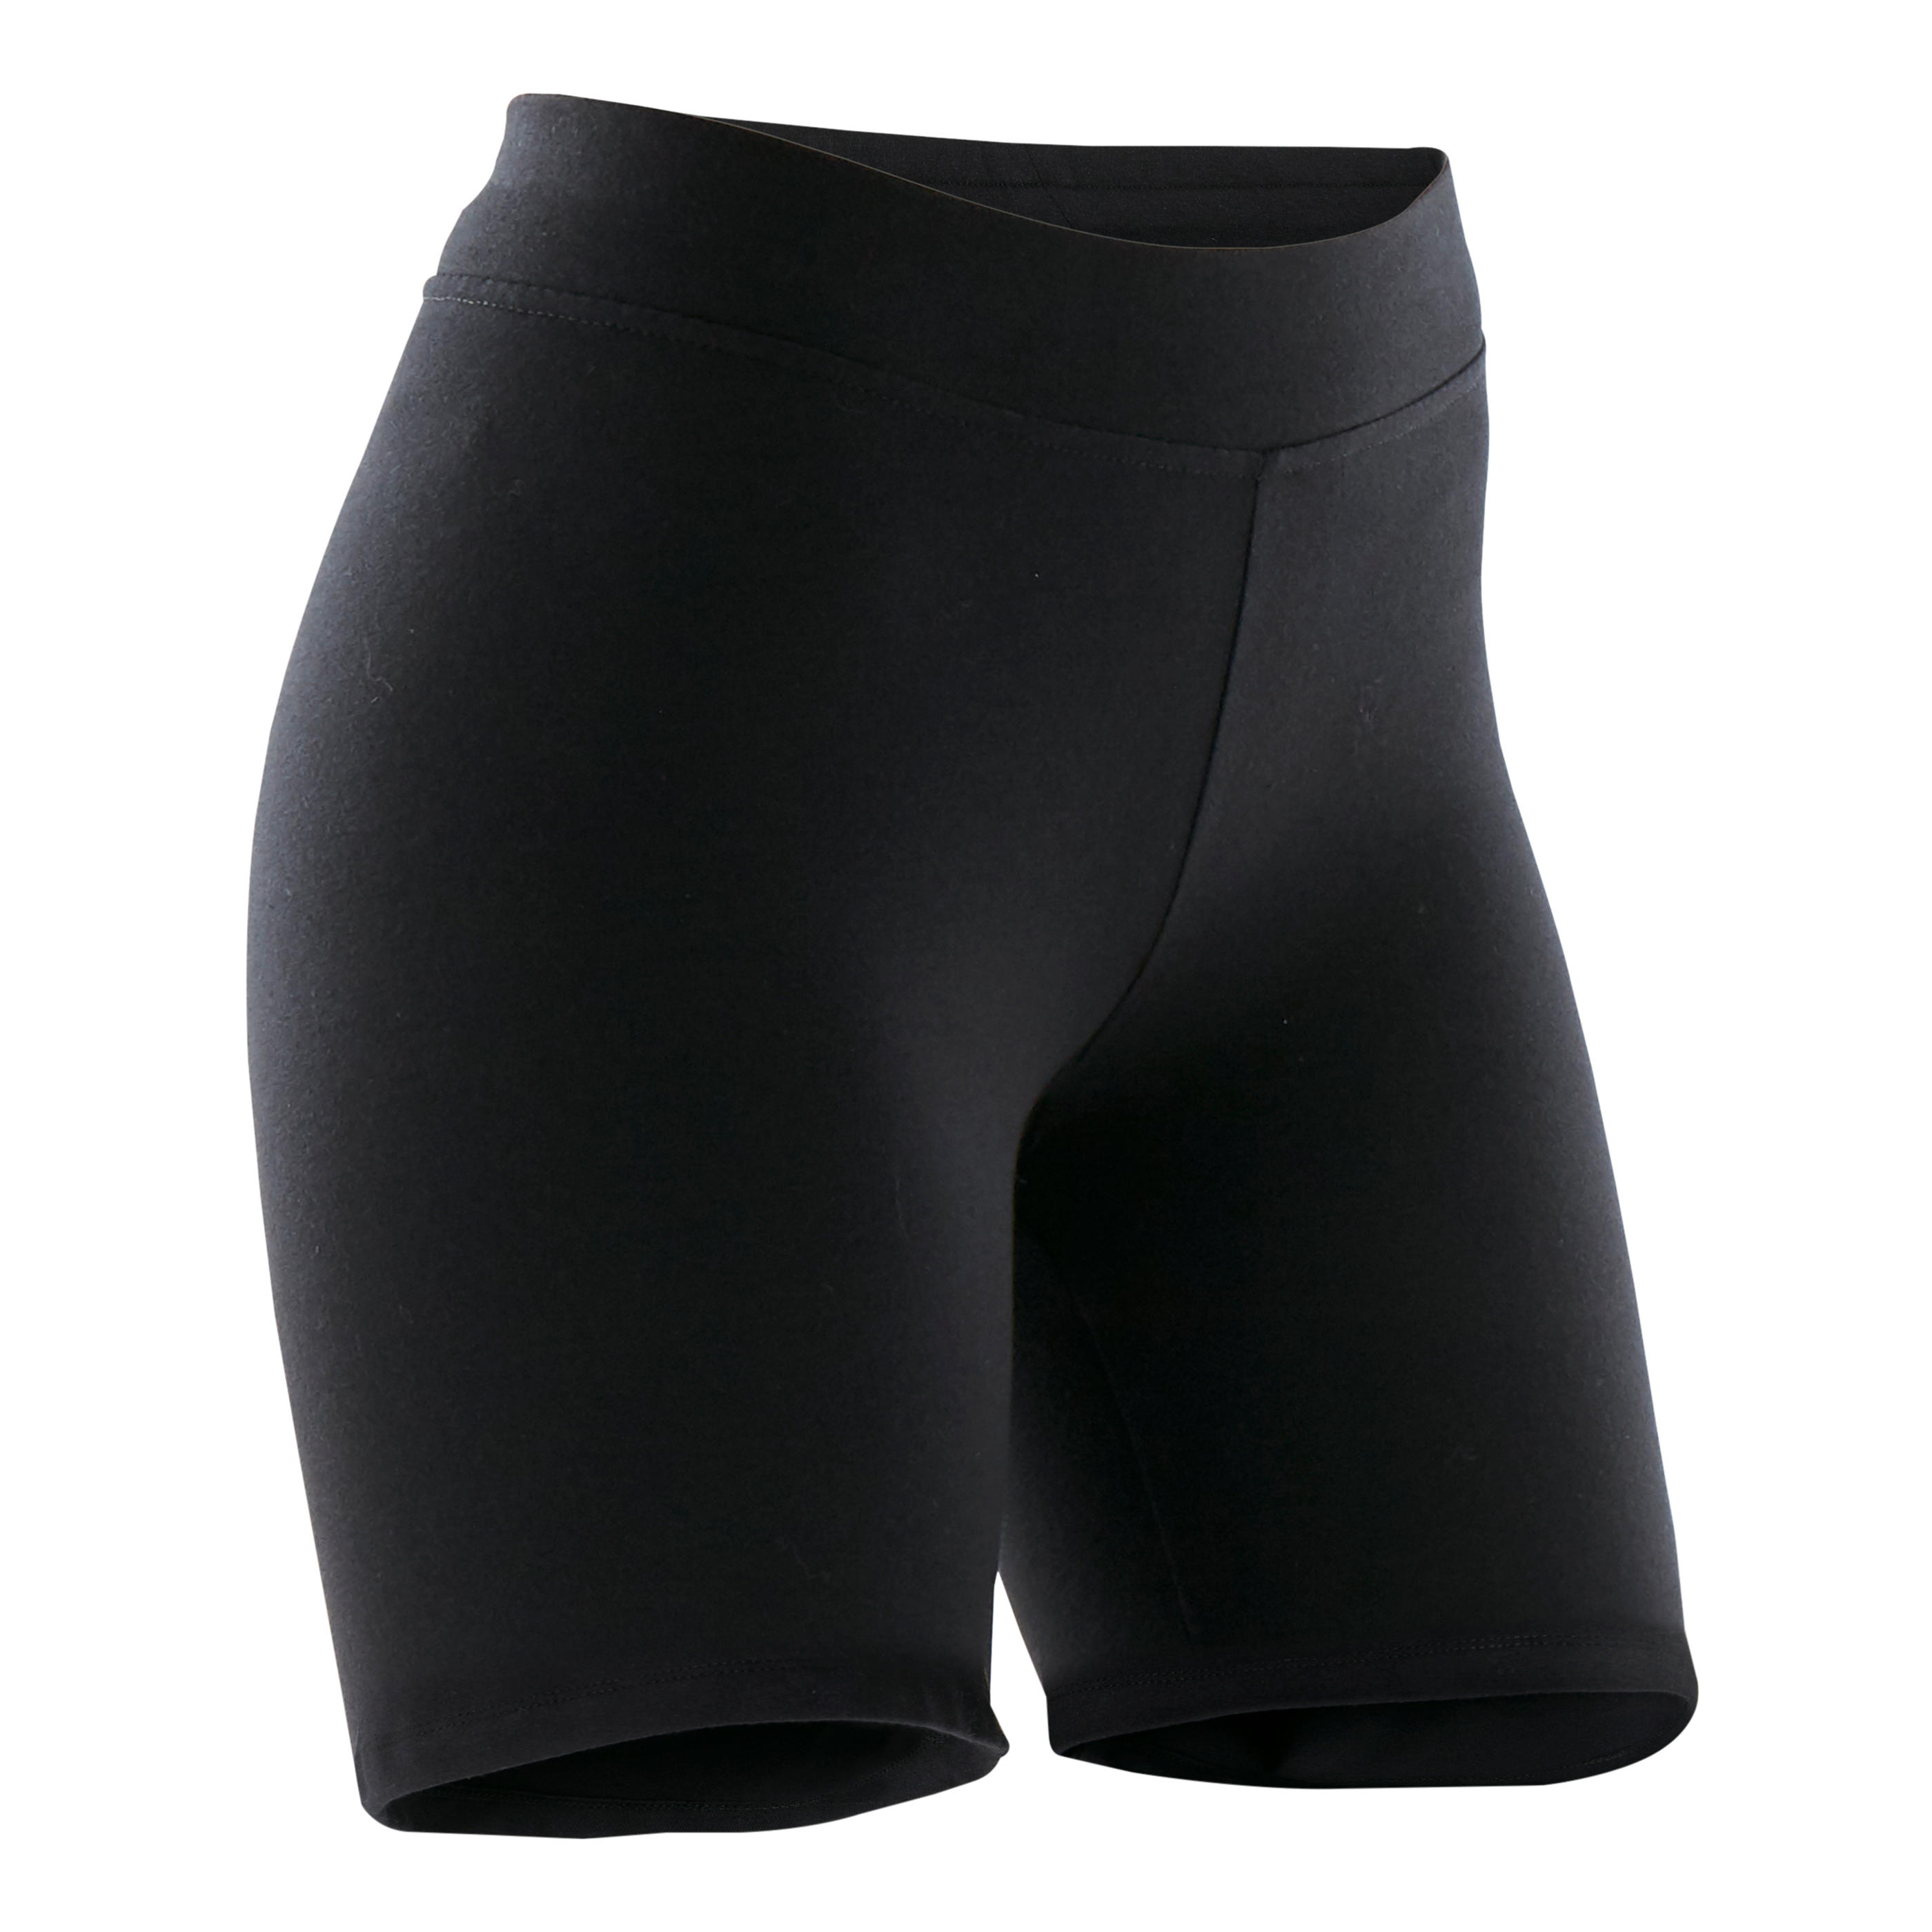 decathlon lycra shorts